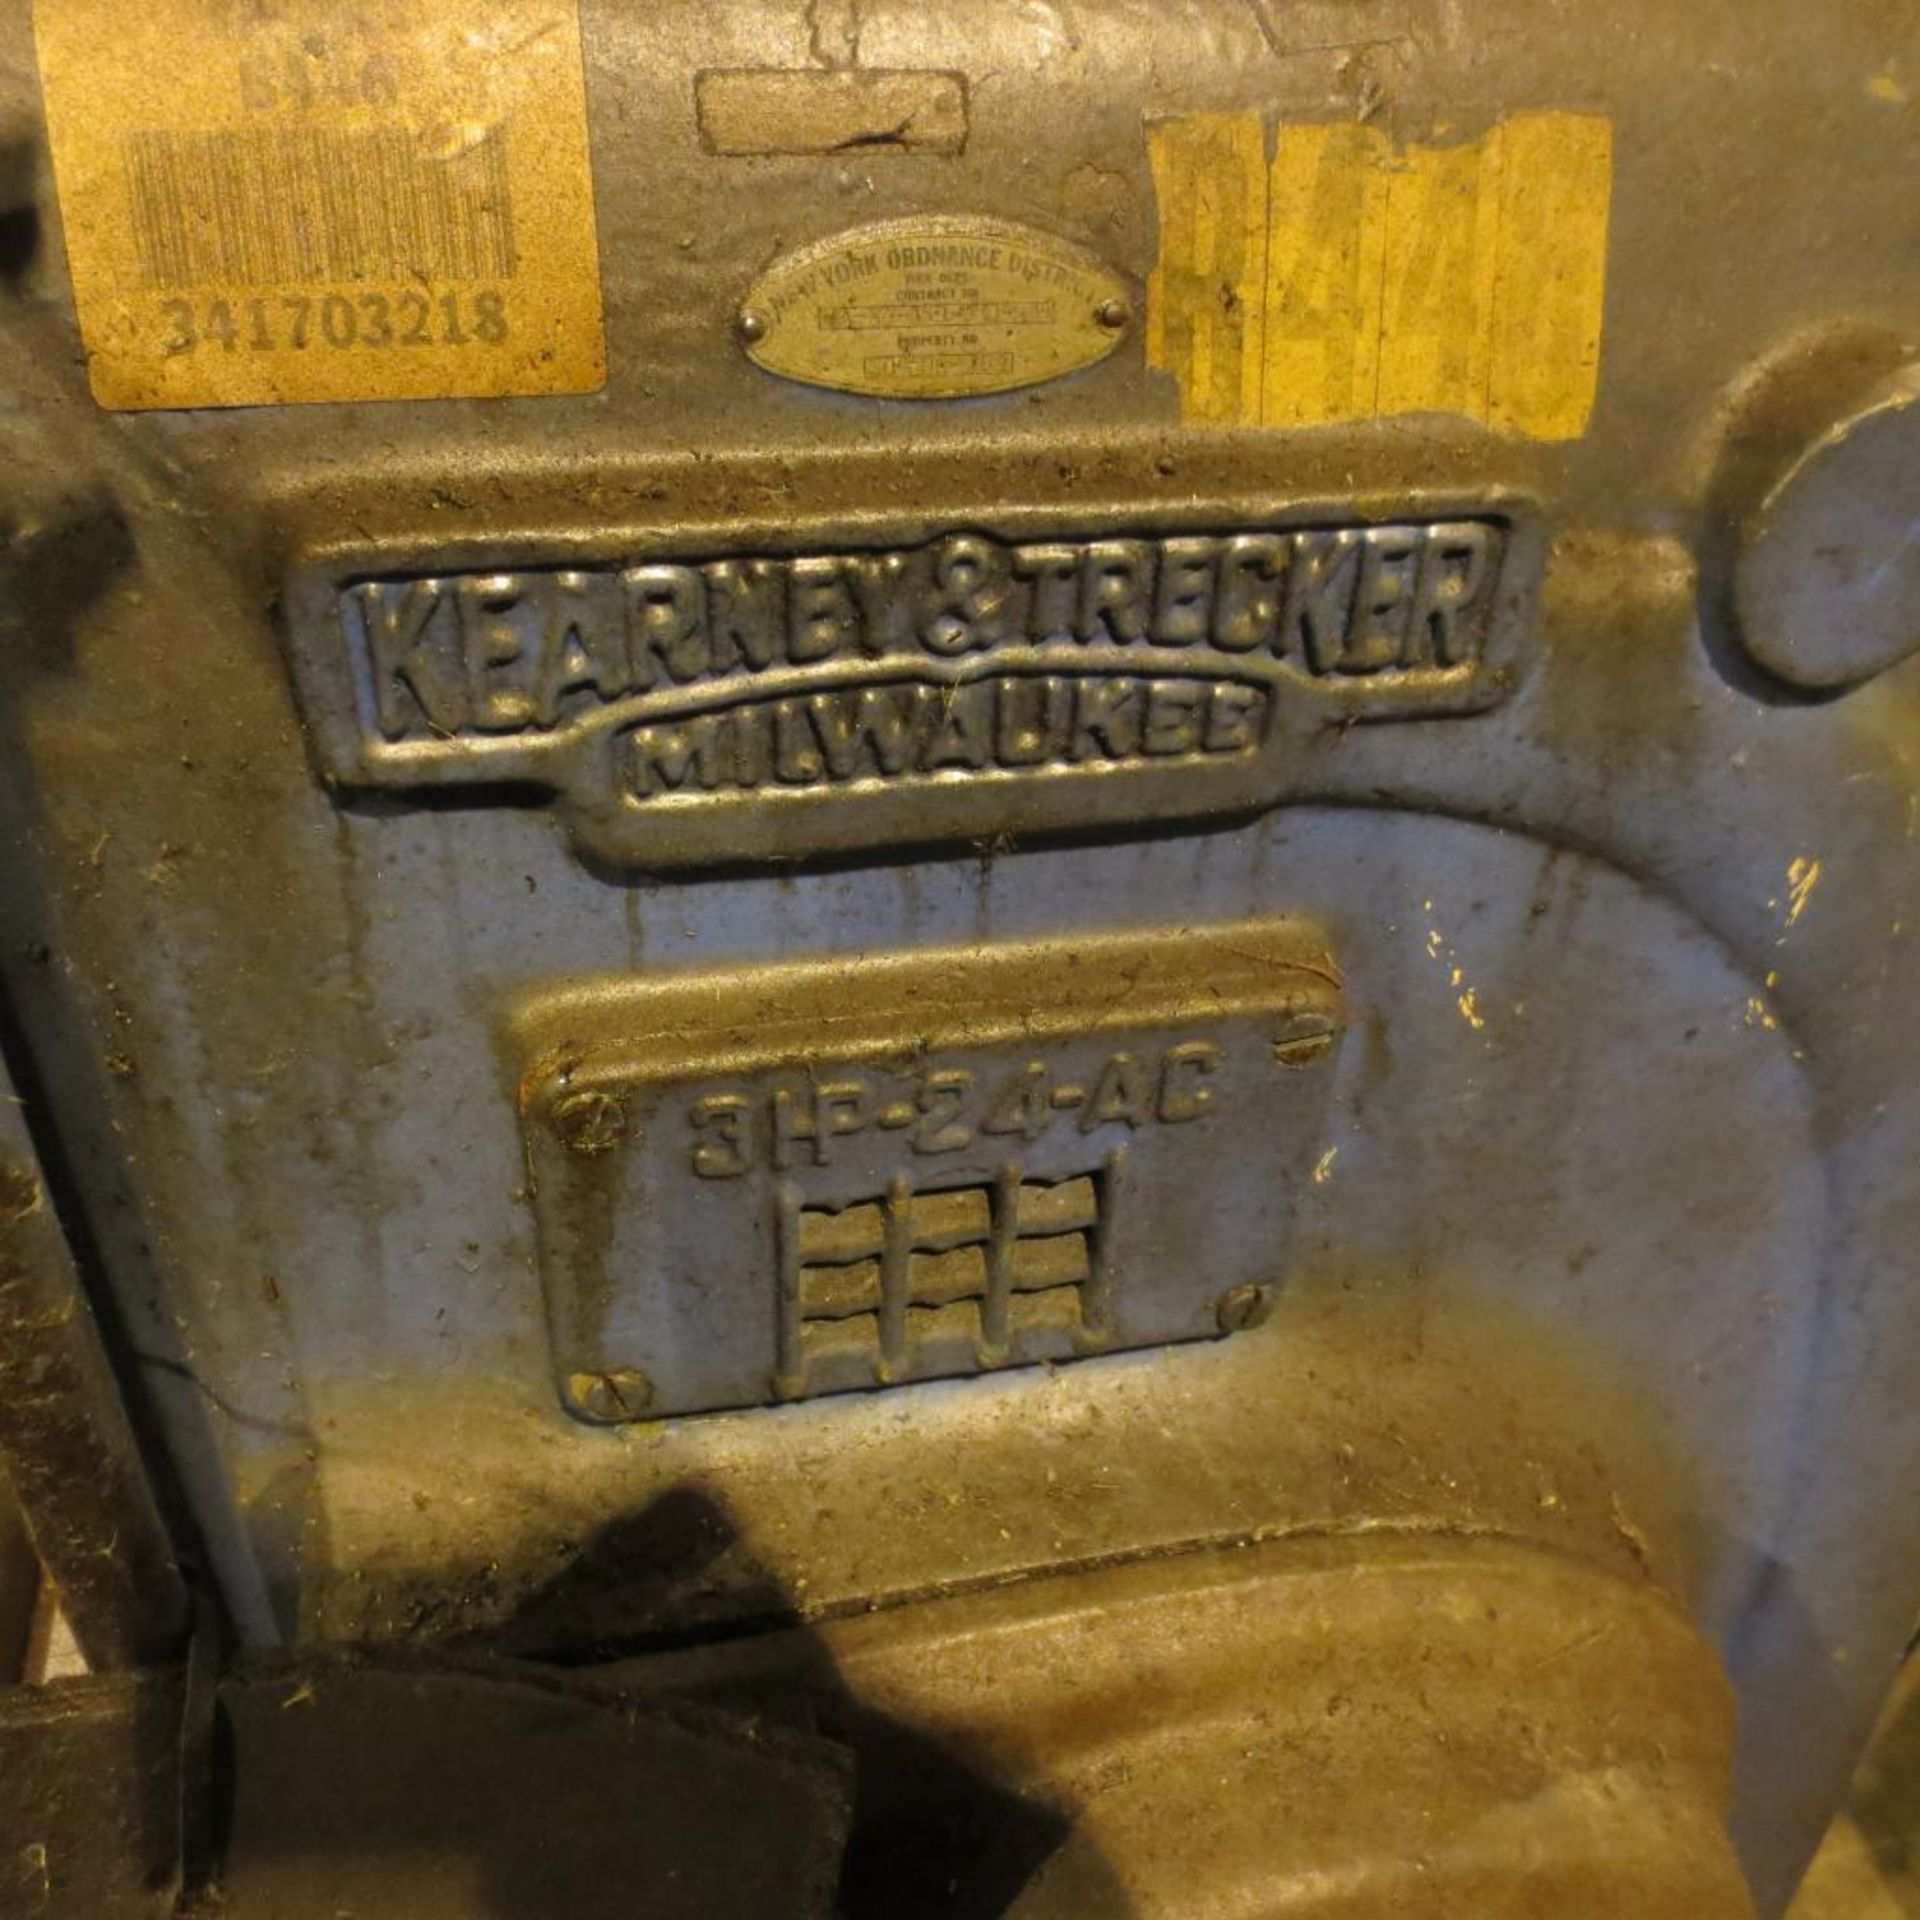 Kearney-Trecker 3 HP-24-AC Mill *RIGGING $100* - Image 2 of 2